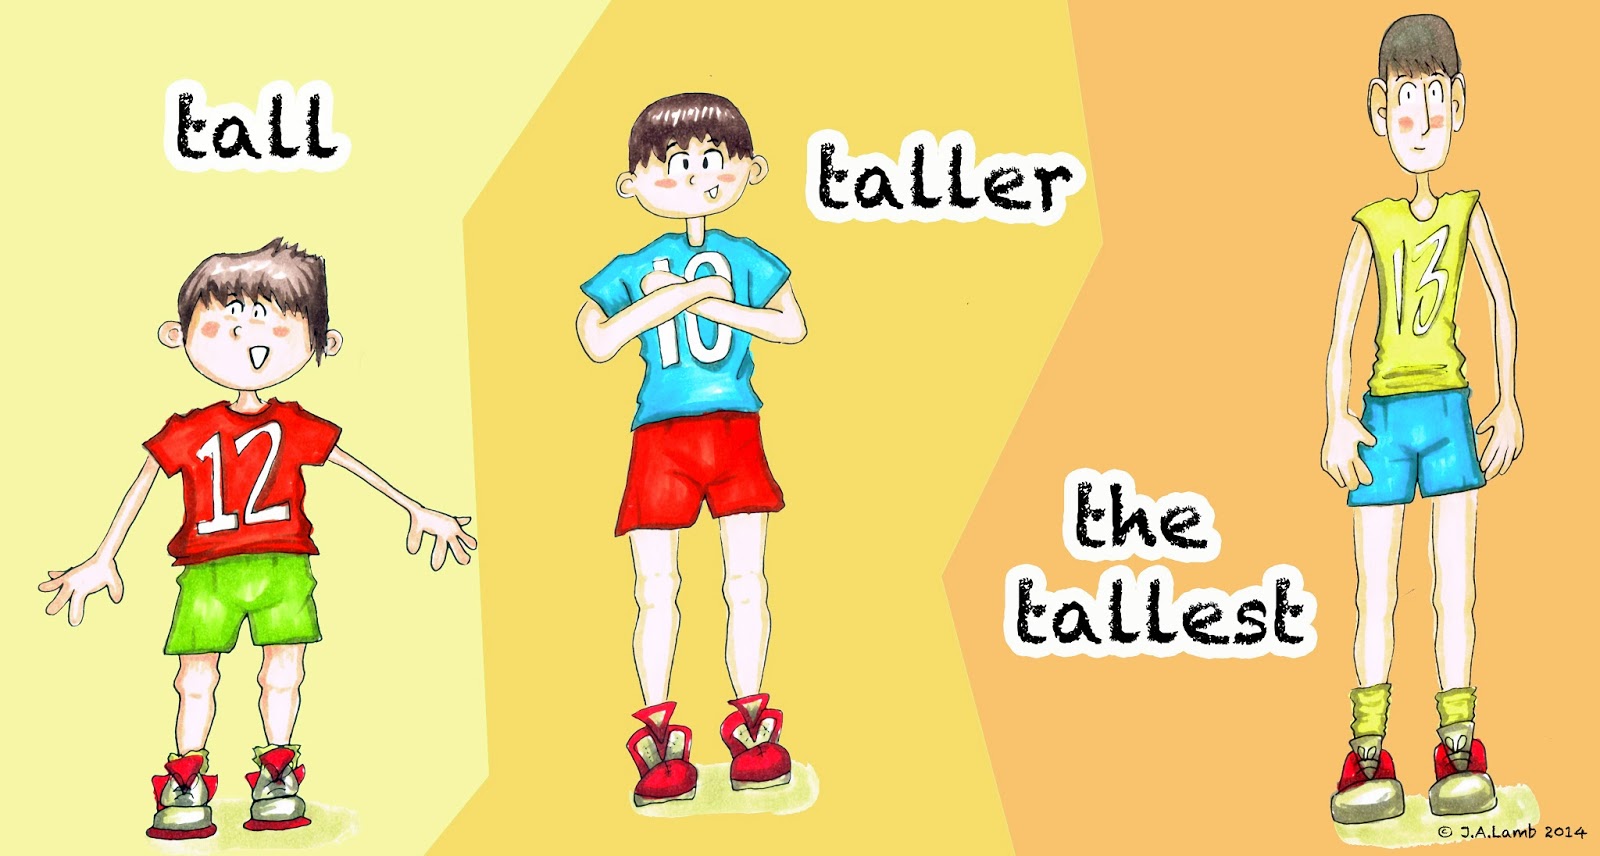 Tall на русском языке. Tall Taller. Tall Taller the Tallest правило. The Tallest рисунок. Ефдд Ефддук еру ефддуые.